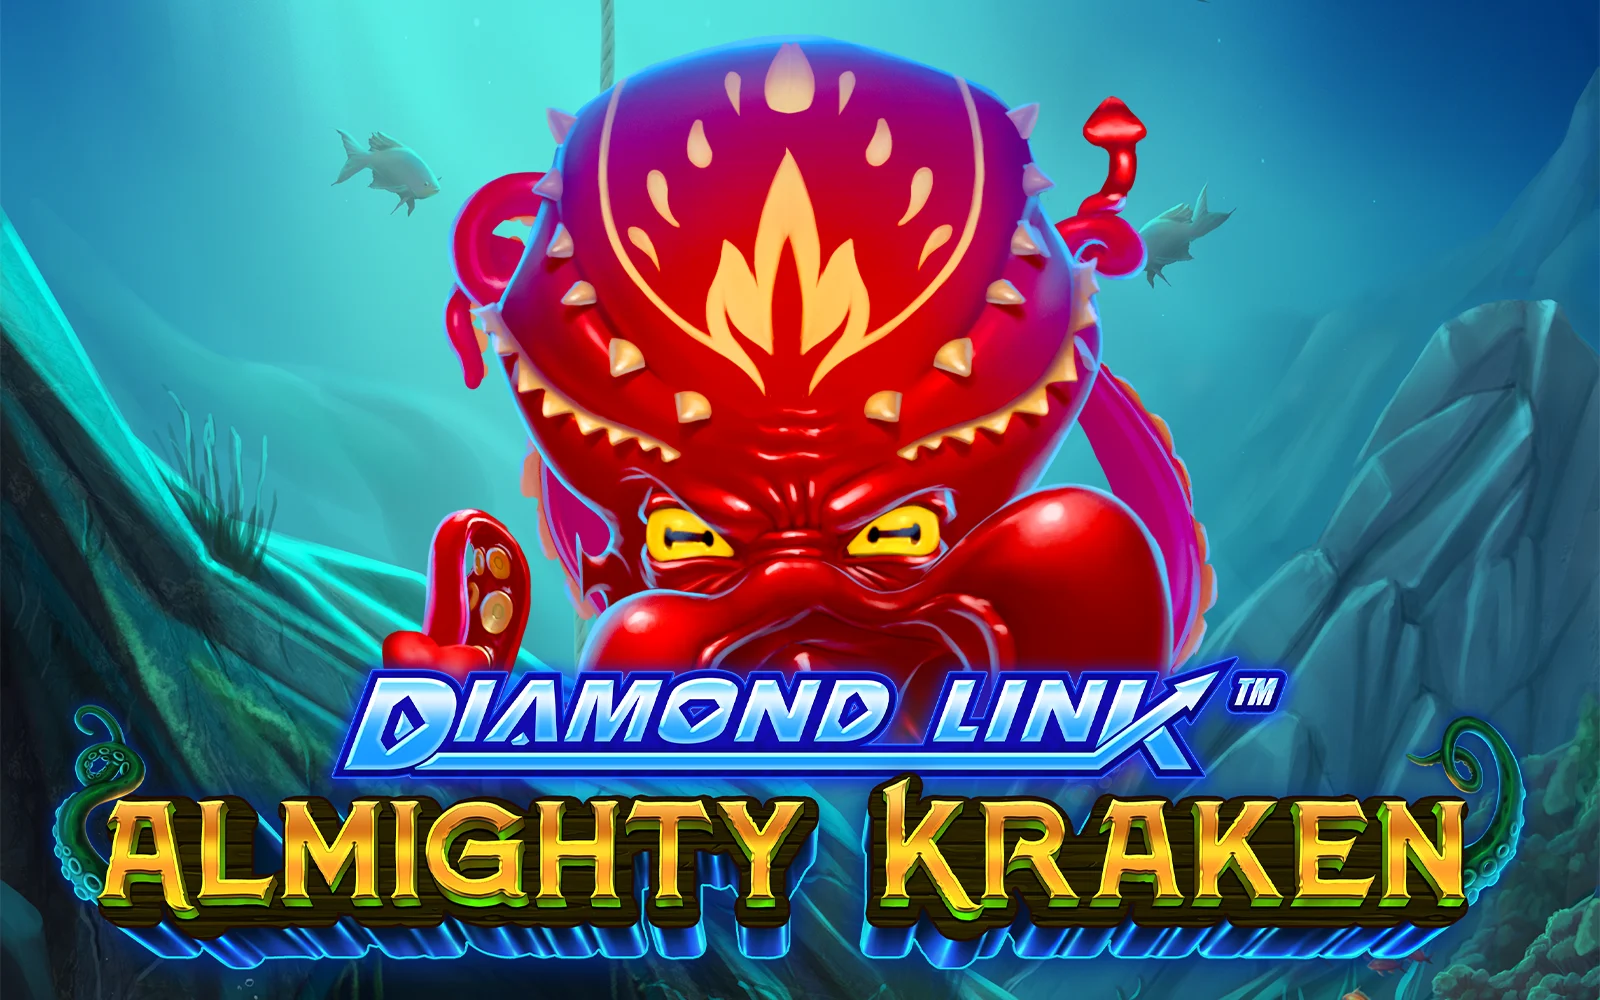 Chơi Diamond Link™ : Almighty Kraken trên sòng bạc trực tuyến Starcasino.be